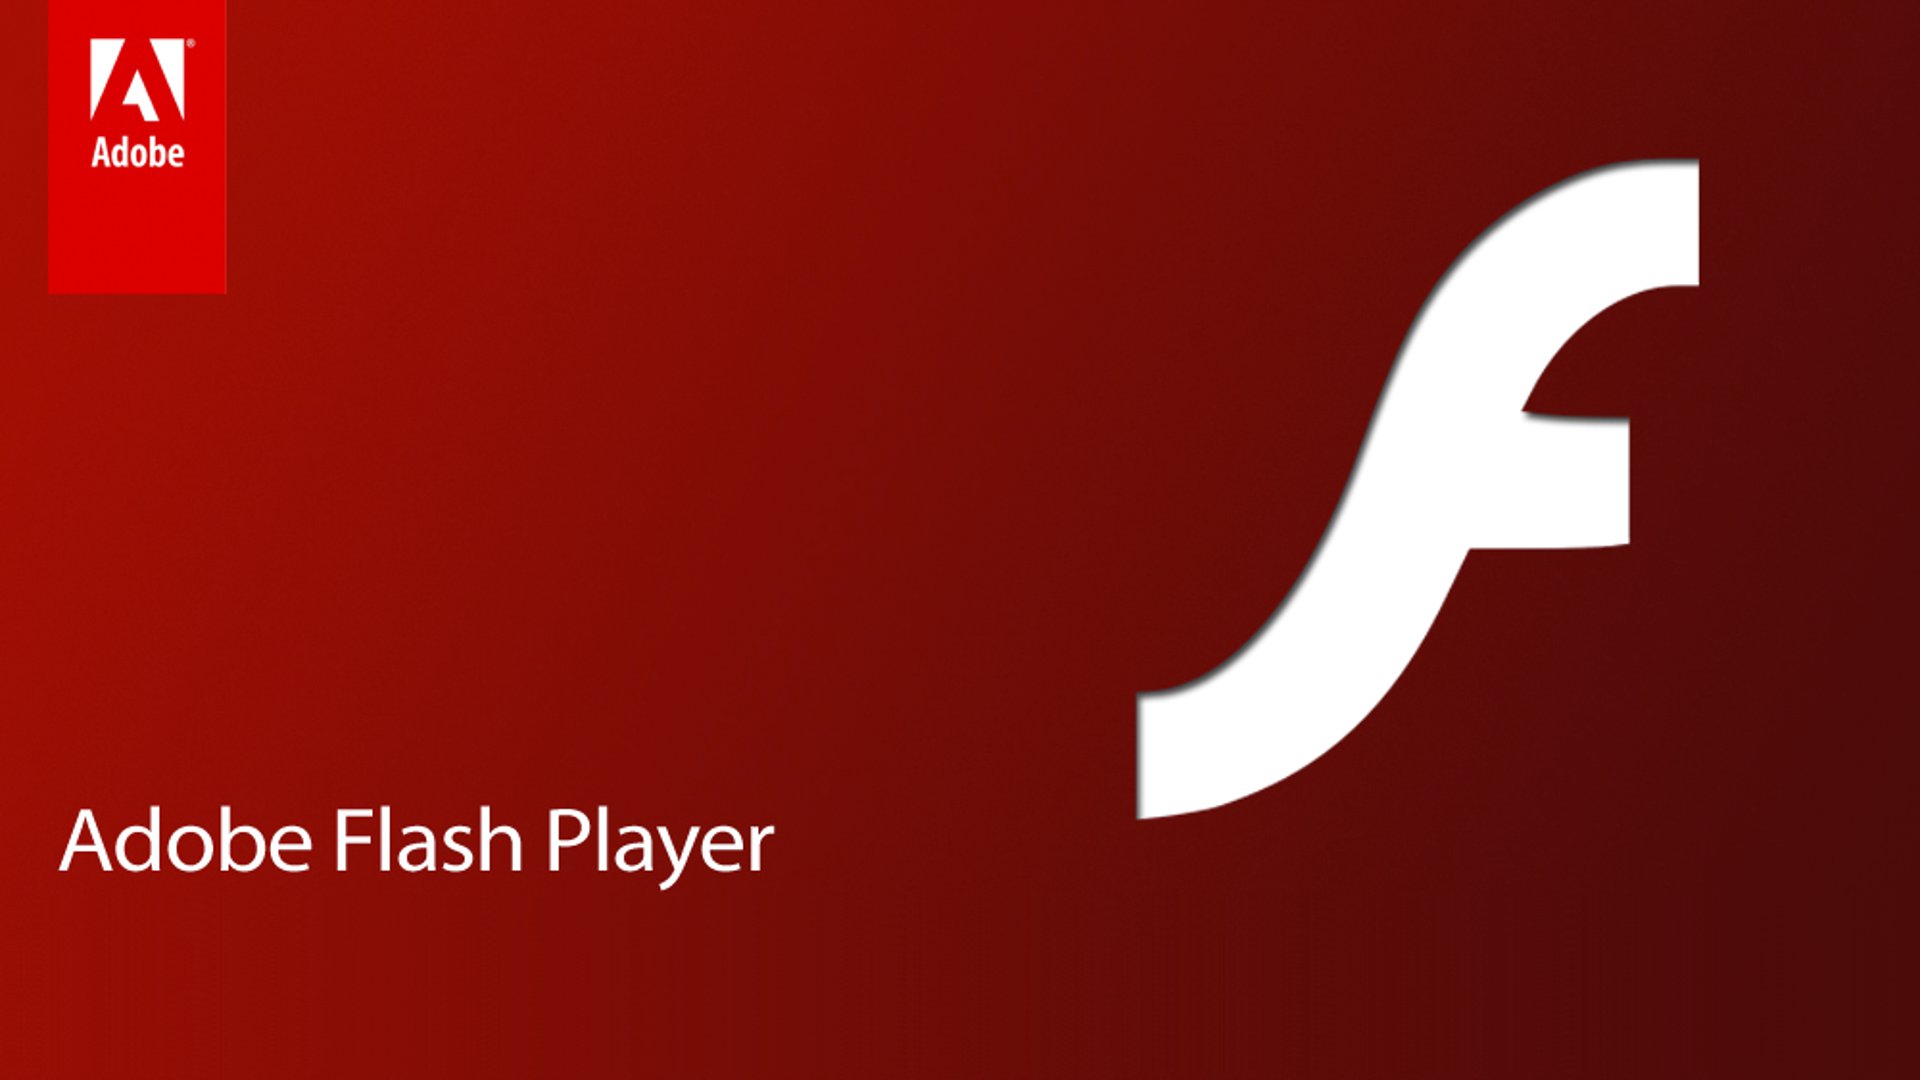 Adobe Flash Player For Mac 11.1